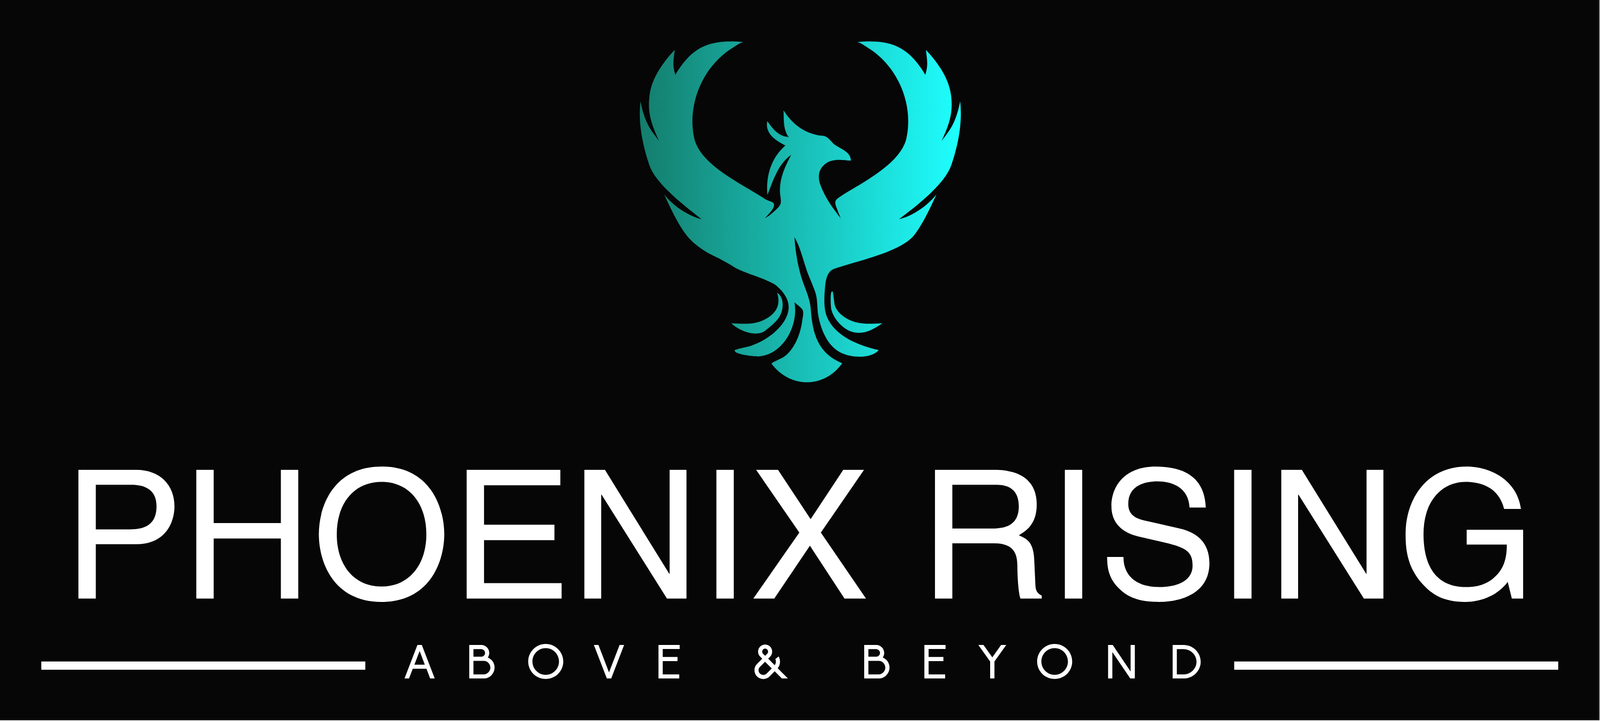 Phoenix Rising: Above & Beyond